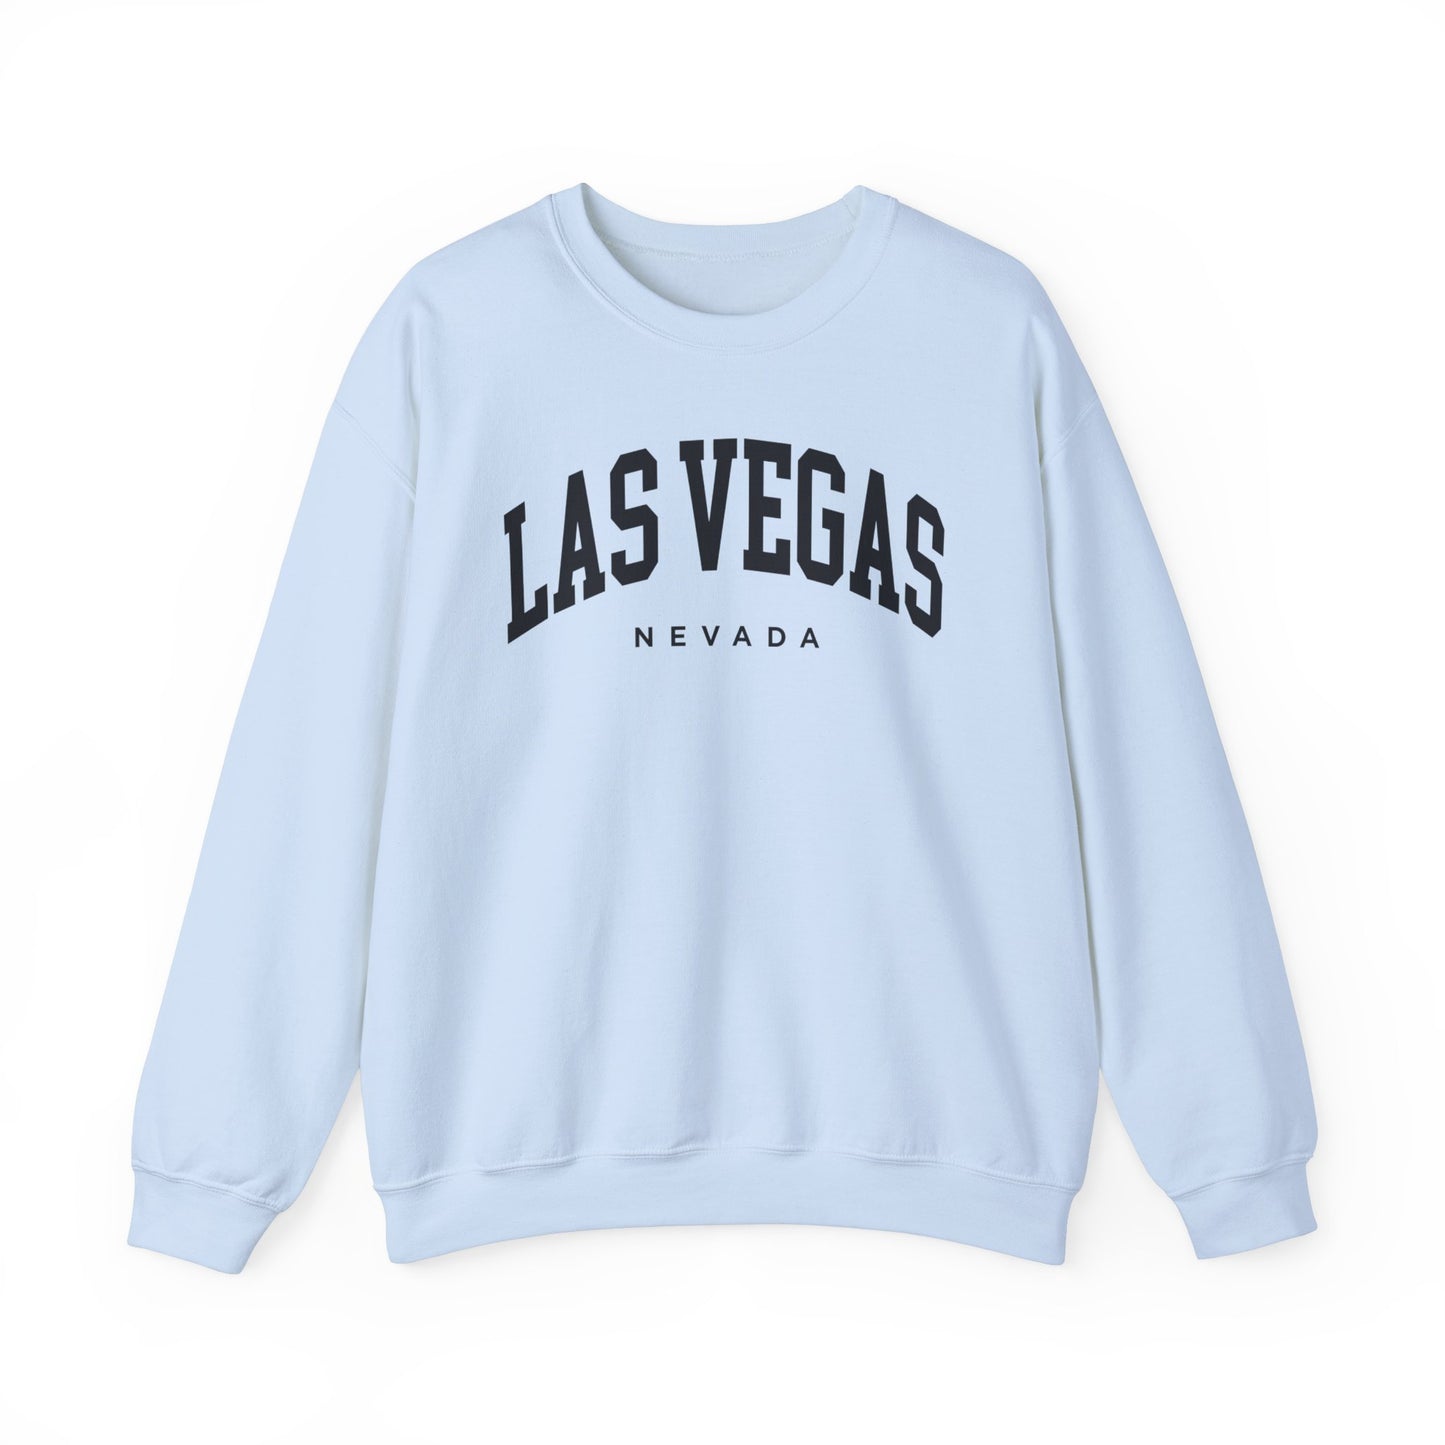 Las Vegas Nevada Sweatshirt